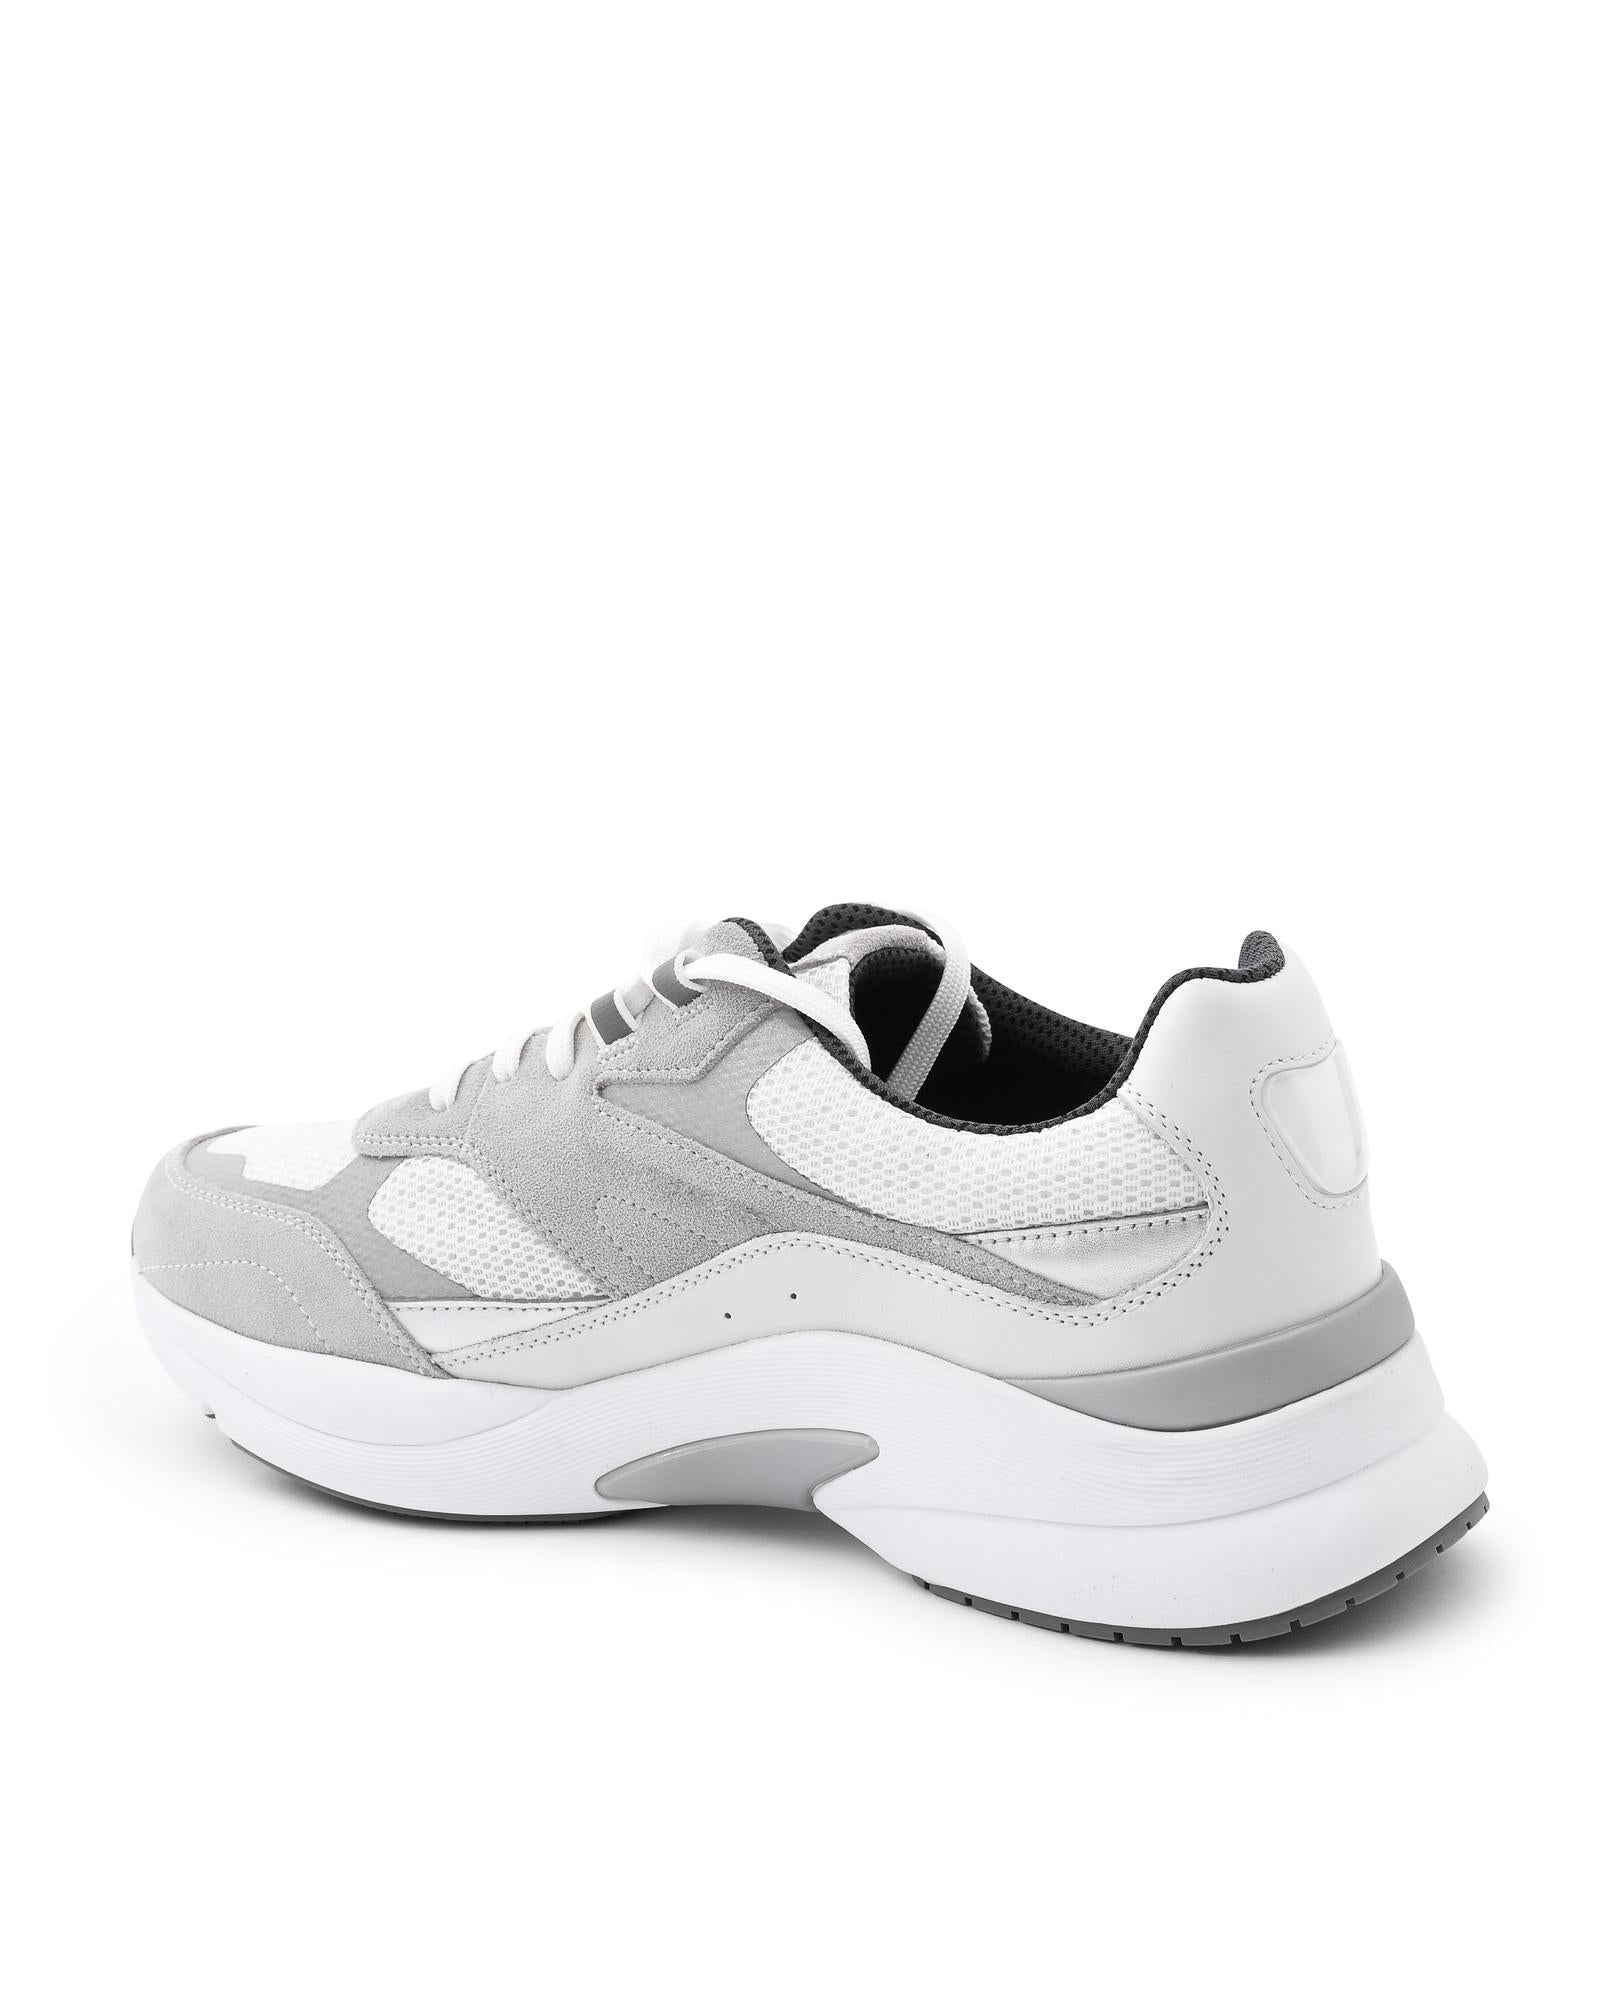 Men's White Leather Sneakers in White - 42 EU